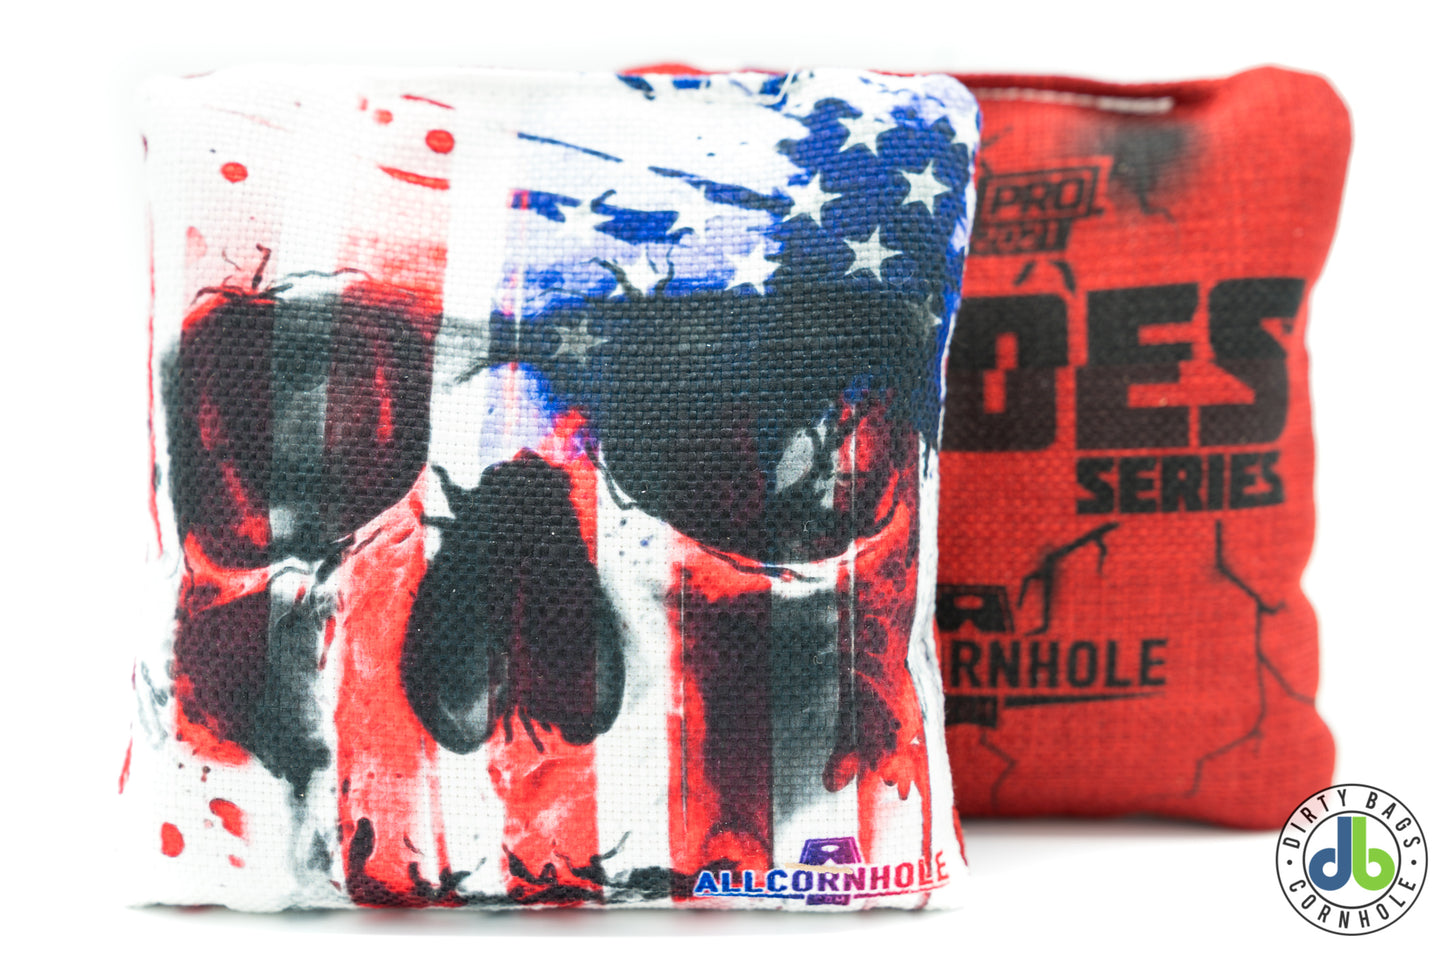 American Cornhole League PRO Bags